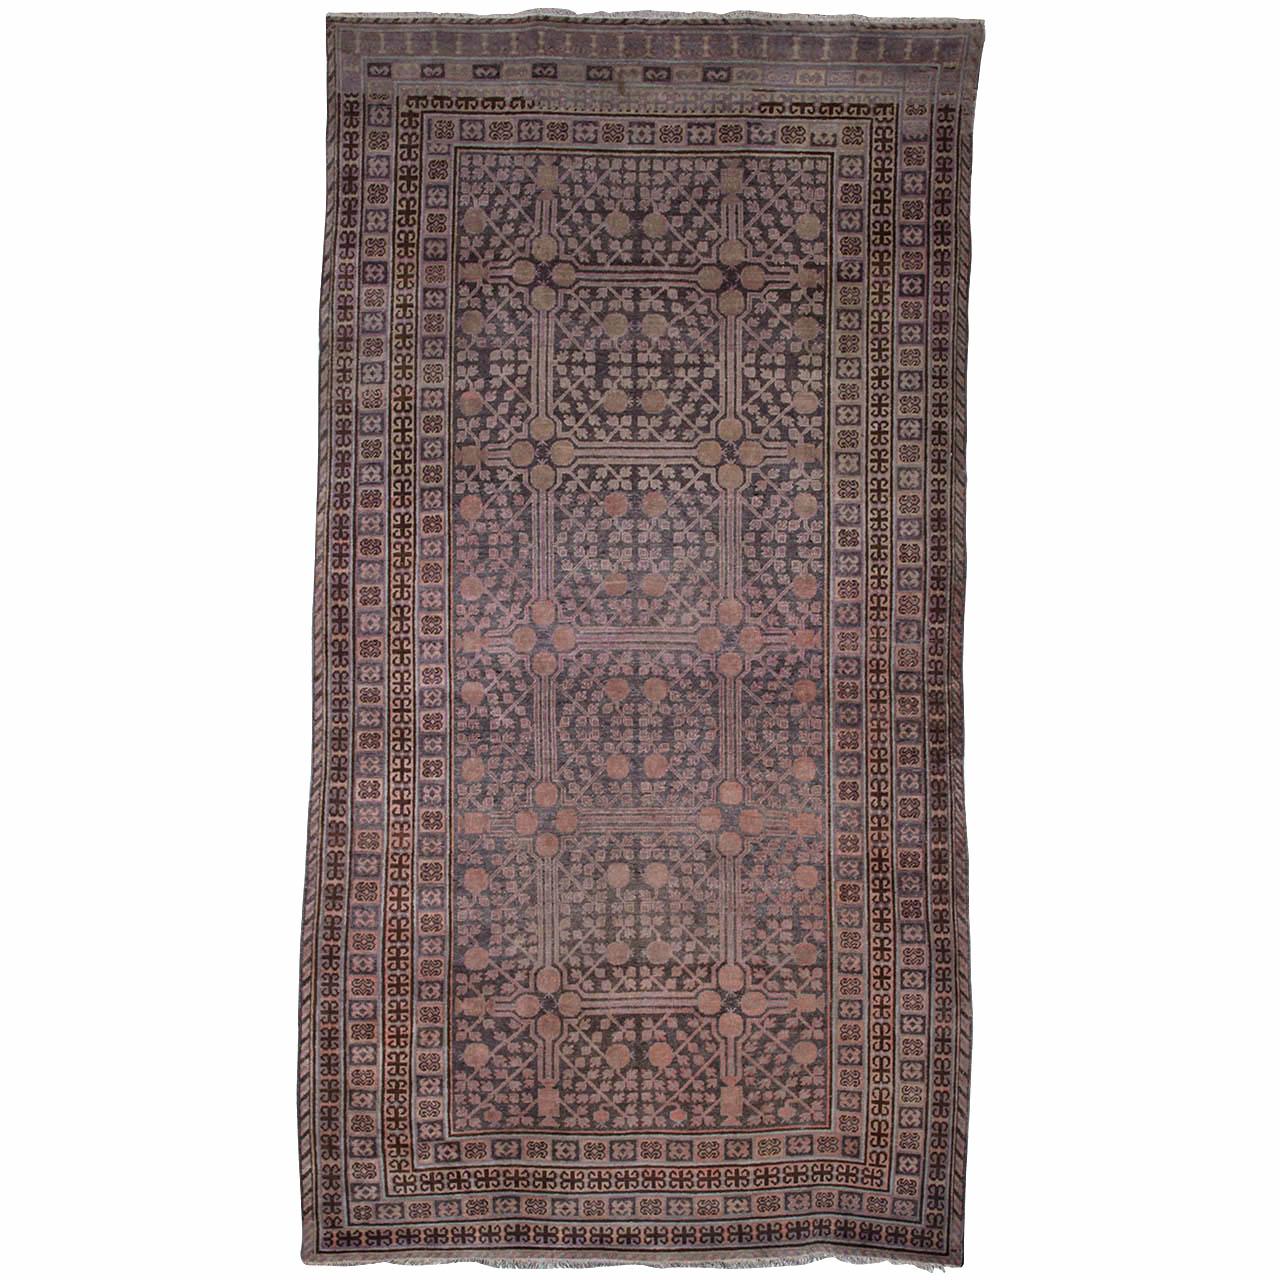 Asian Rare Antique Kothan Carpet or Rug For Sale